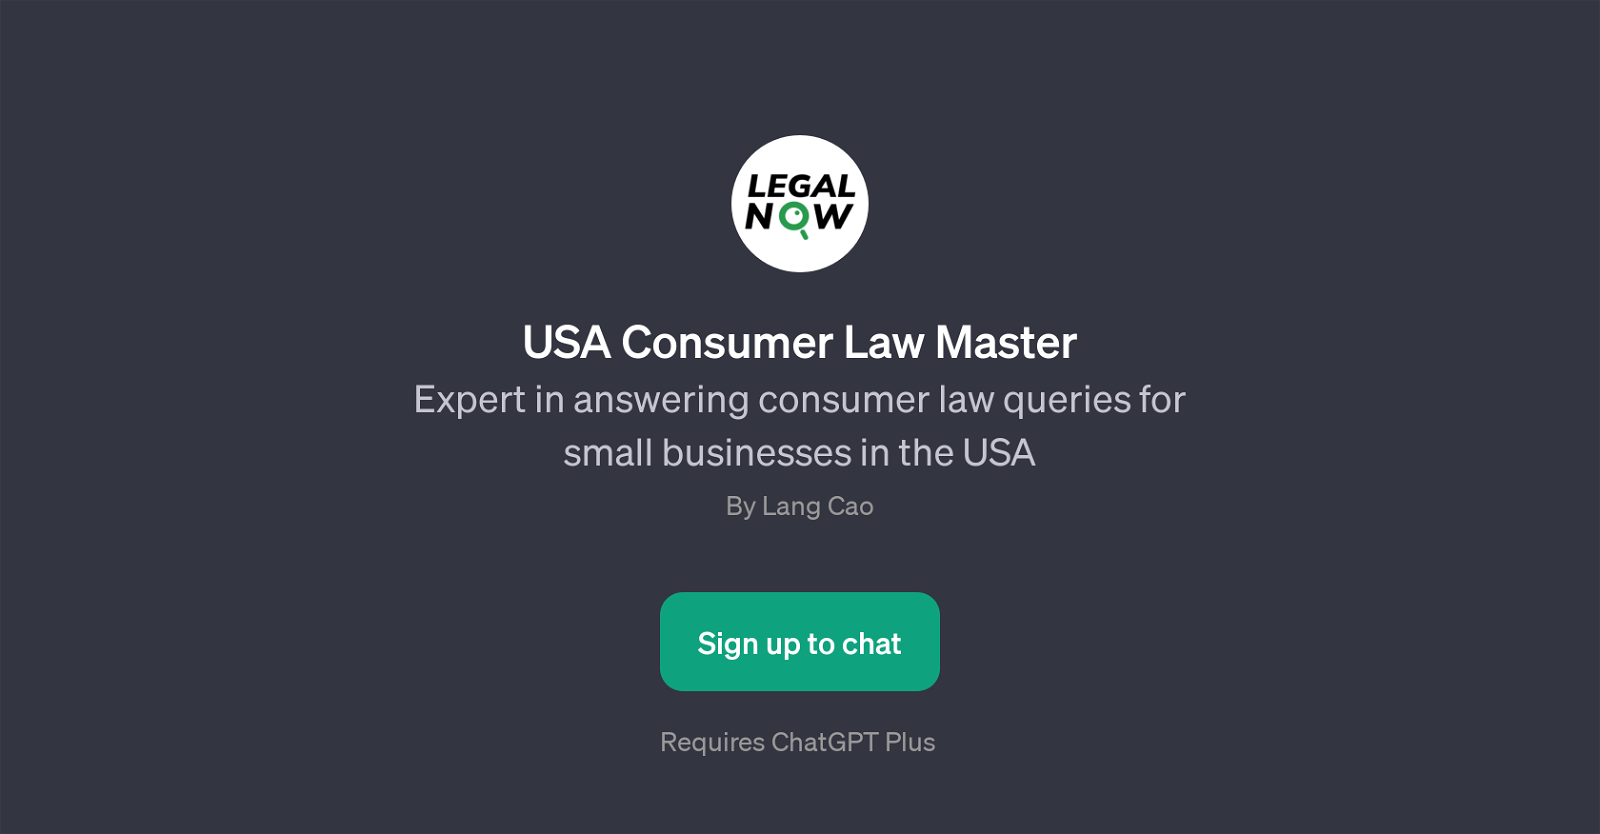 USA Consumer Law Master website